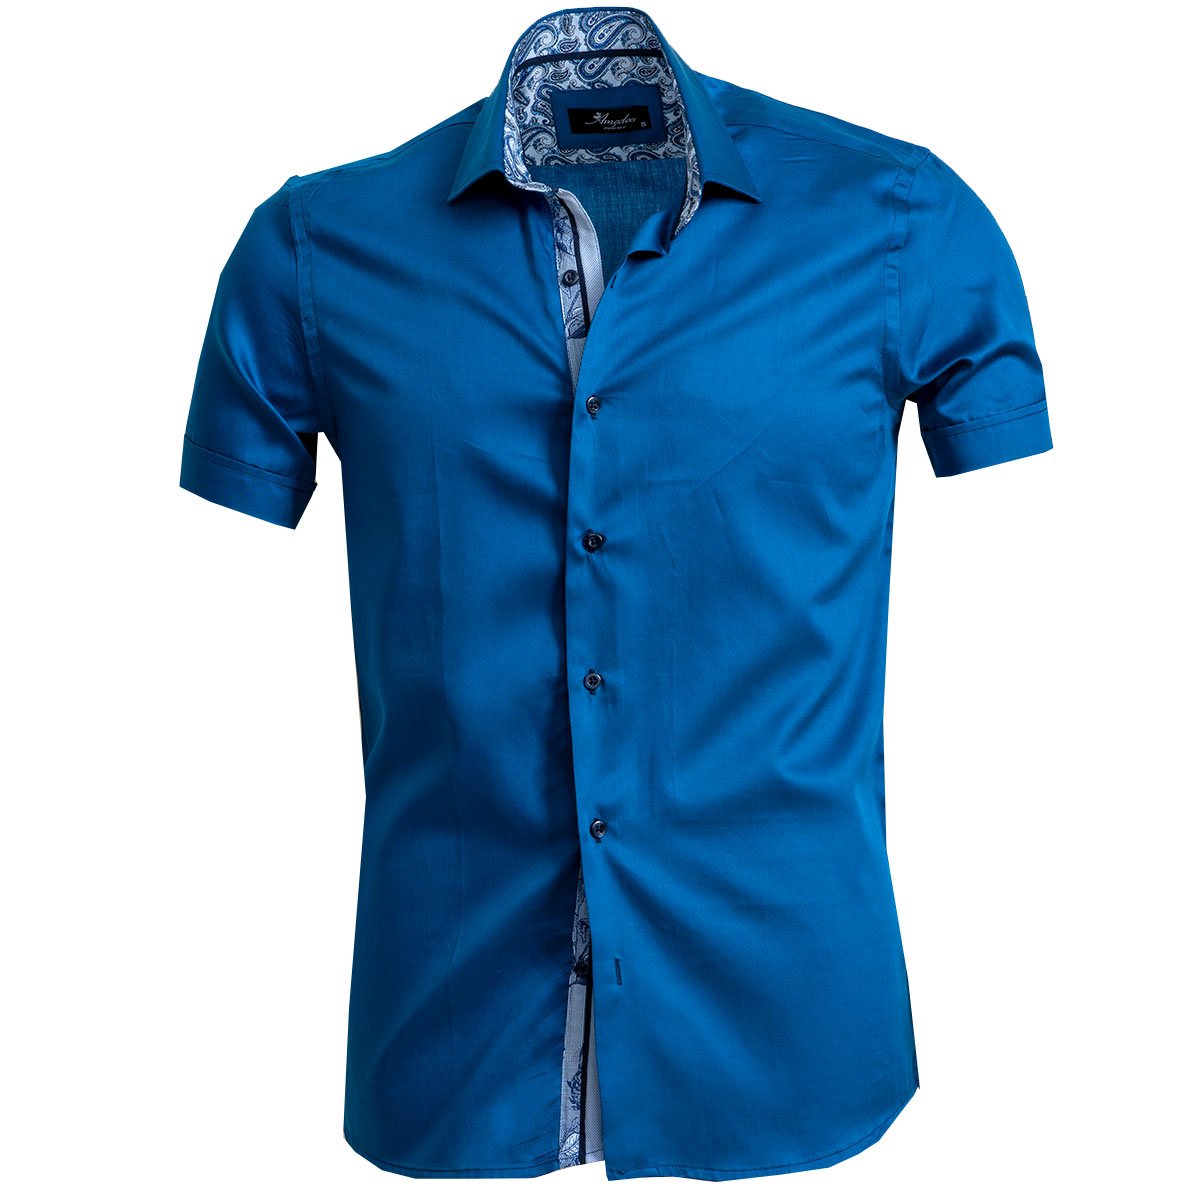 Solid Medium Blue Mens Short Sleeve Button up Shirts - Tailored Slim